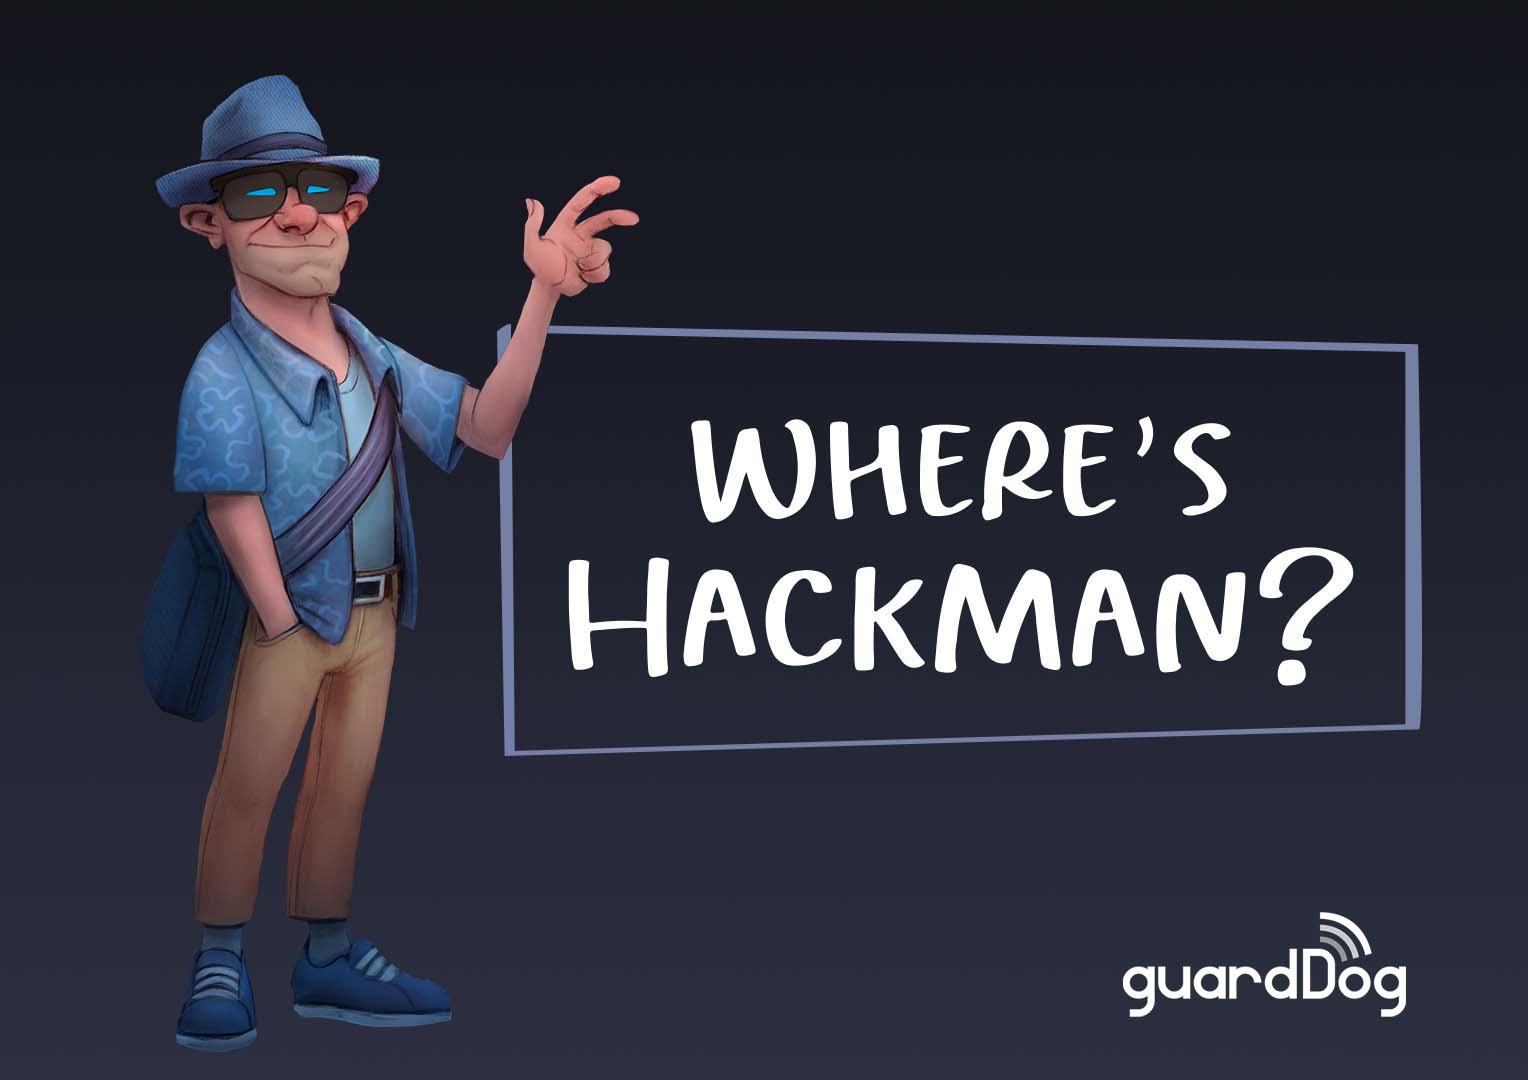 Find hackman